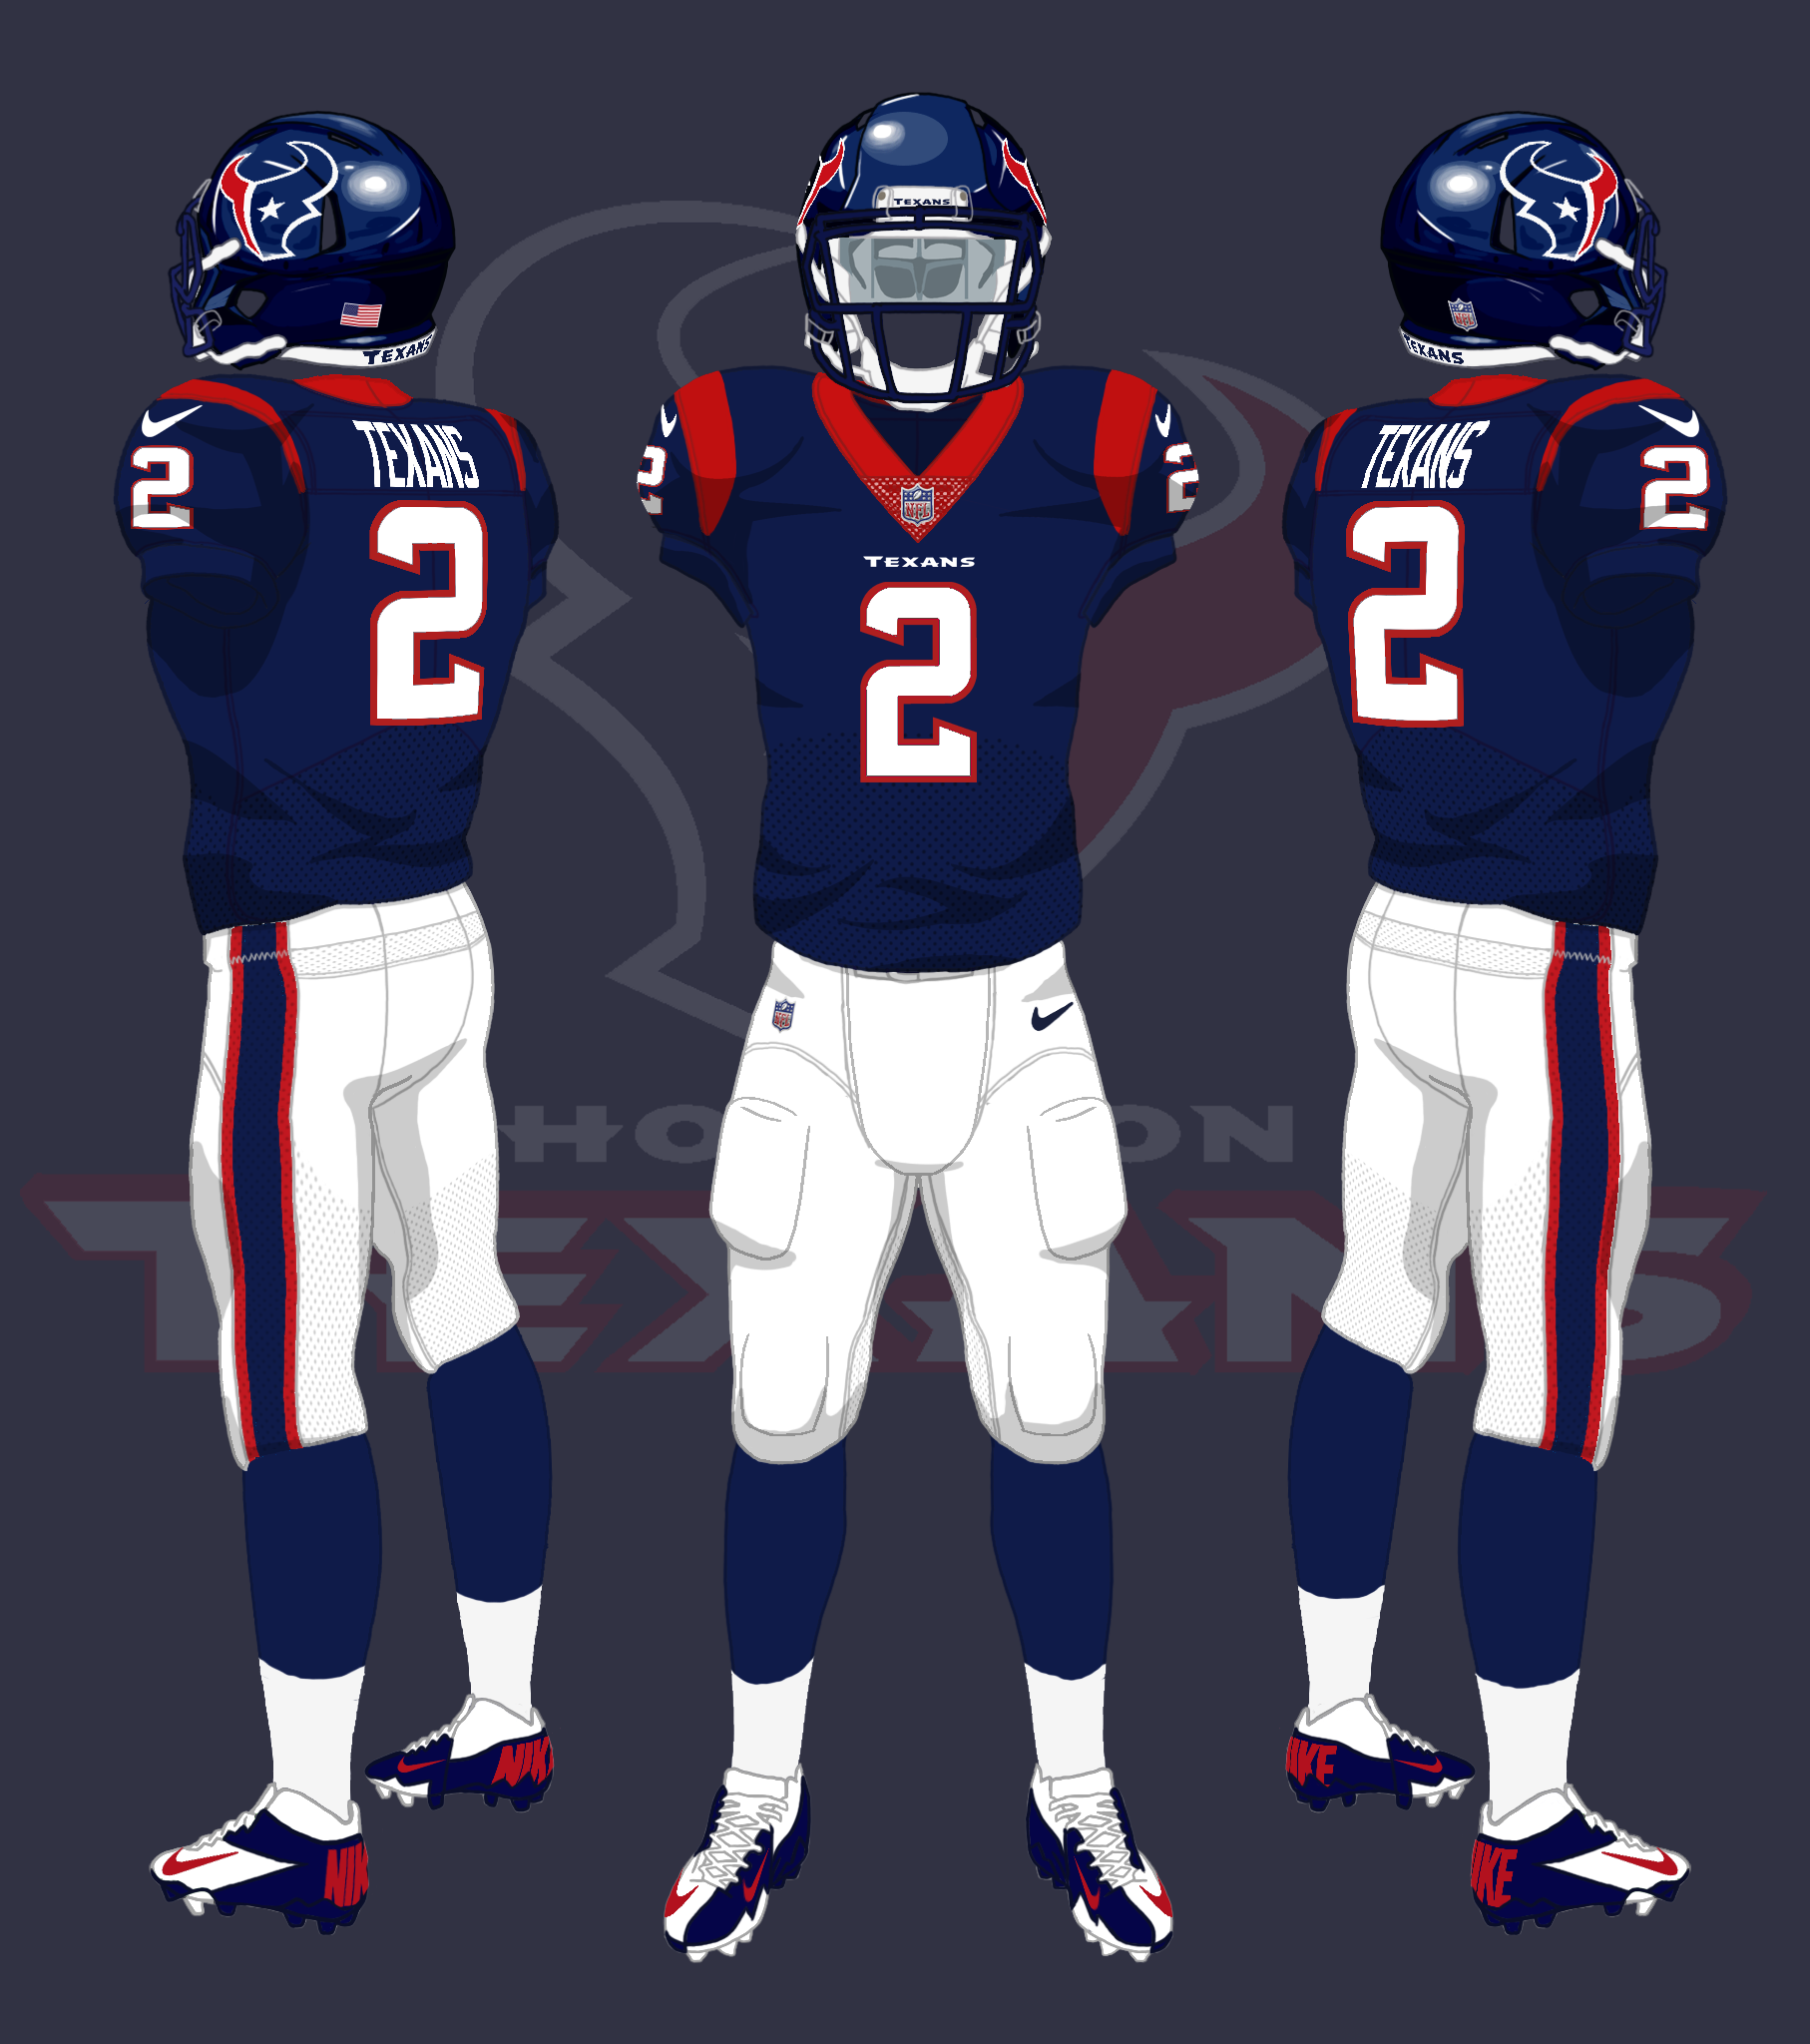 Houston Texans uniforms by CoachFieldsOfNOLA on DeviantArt